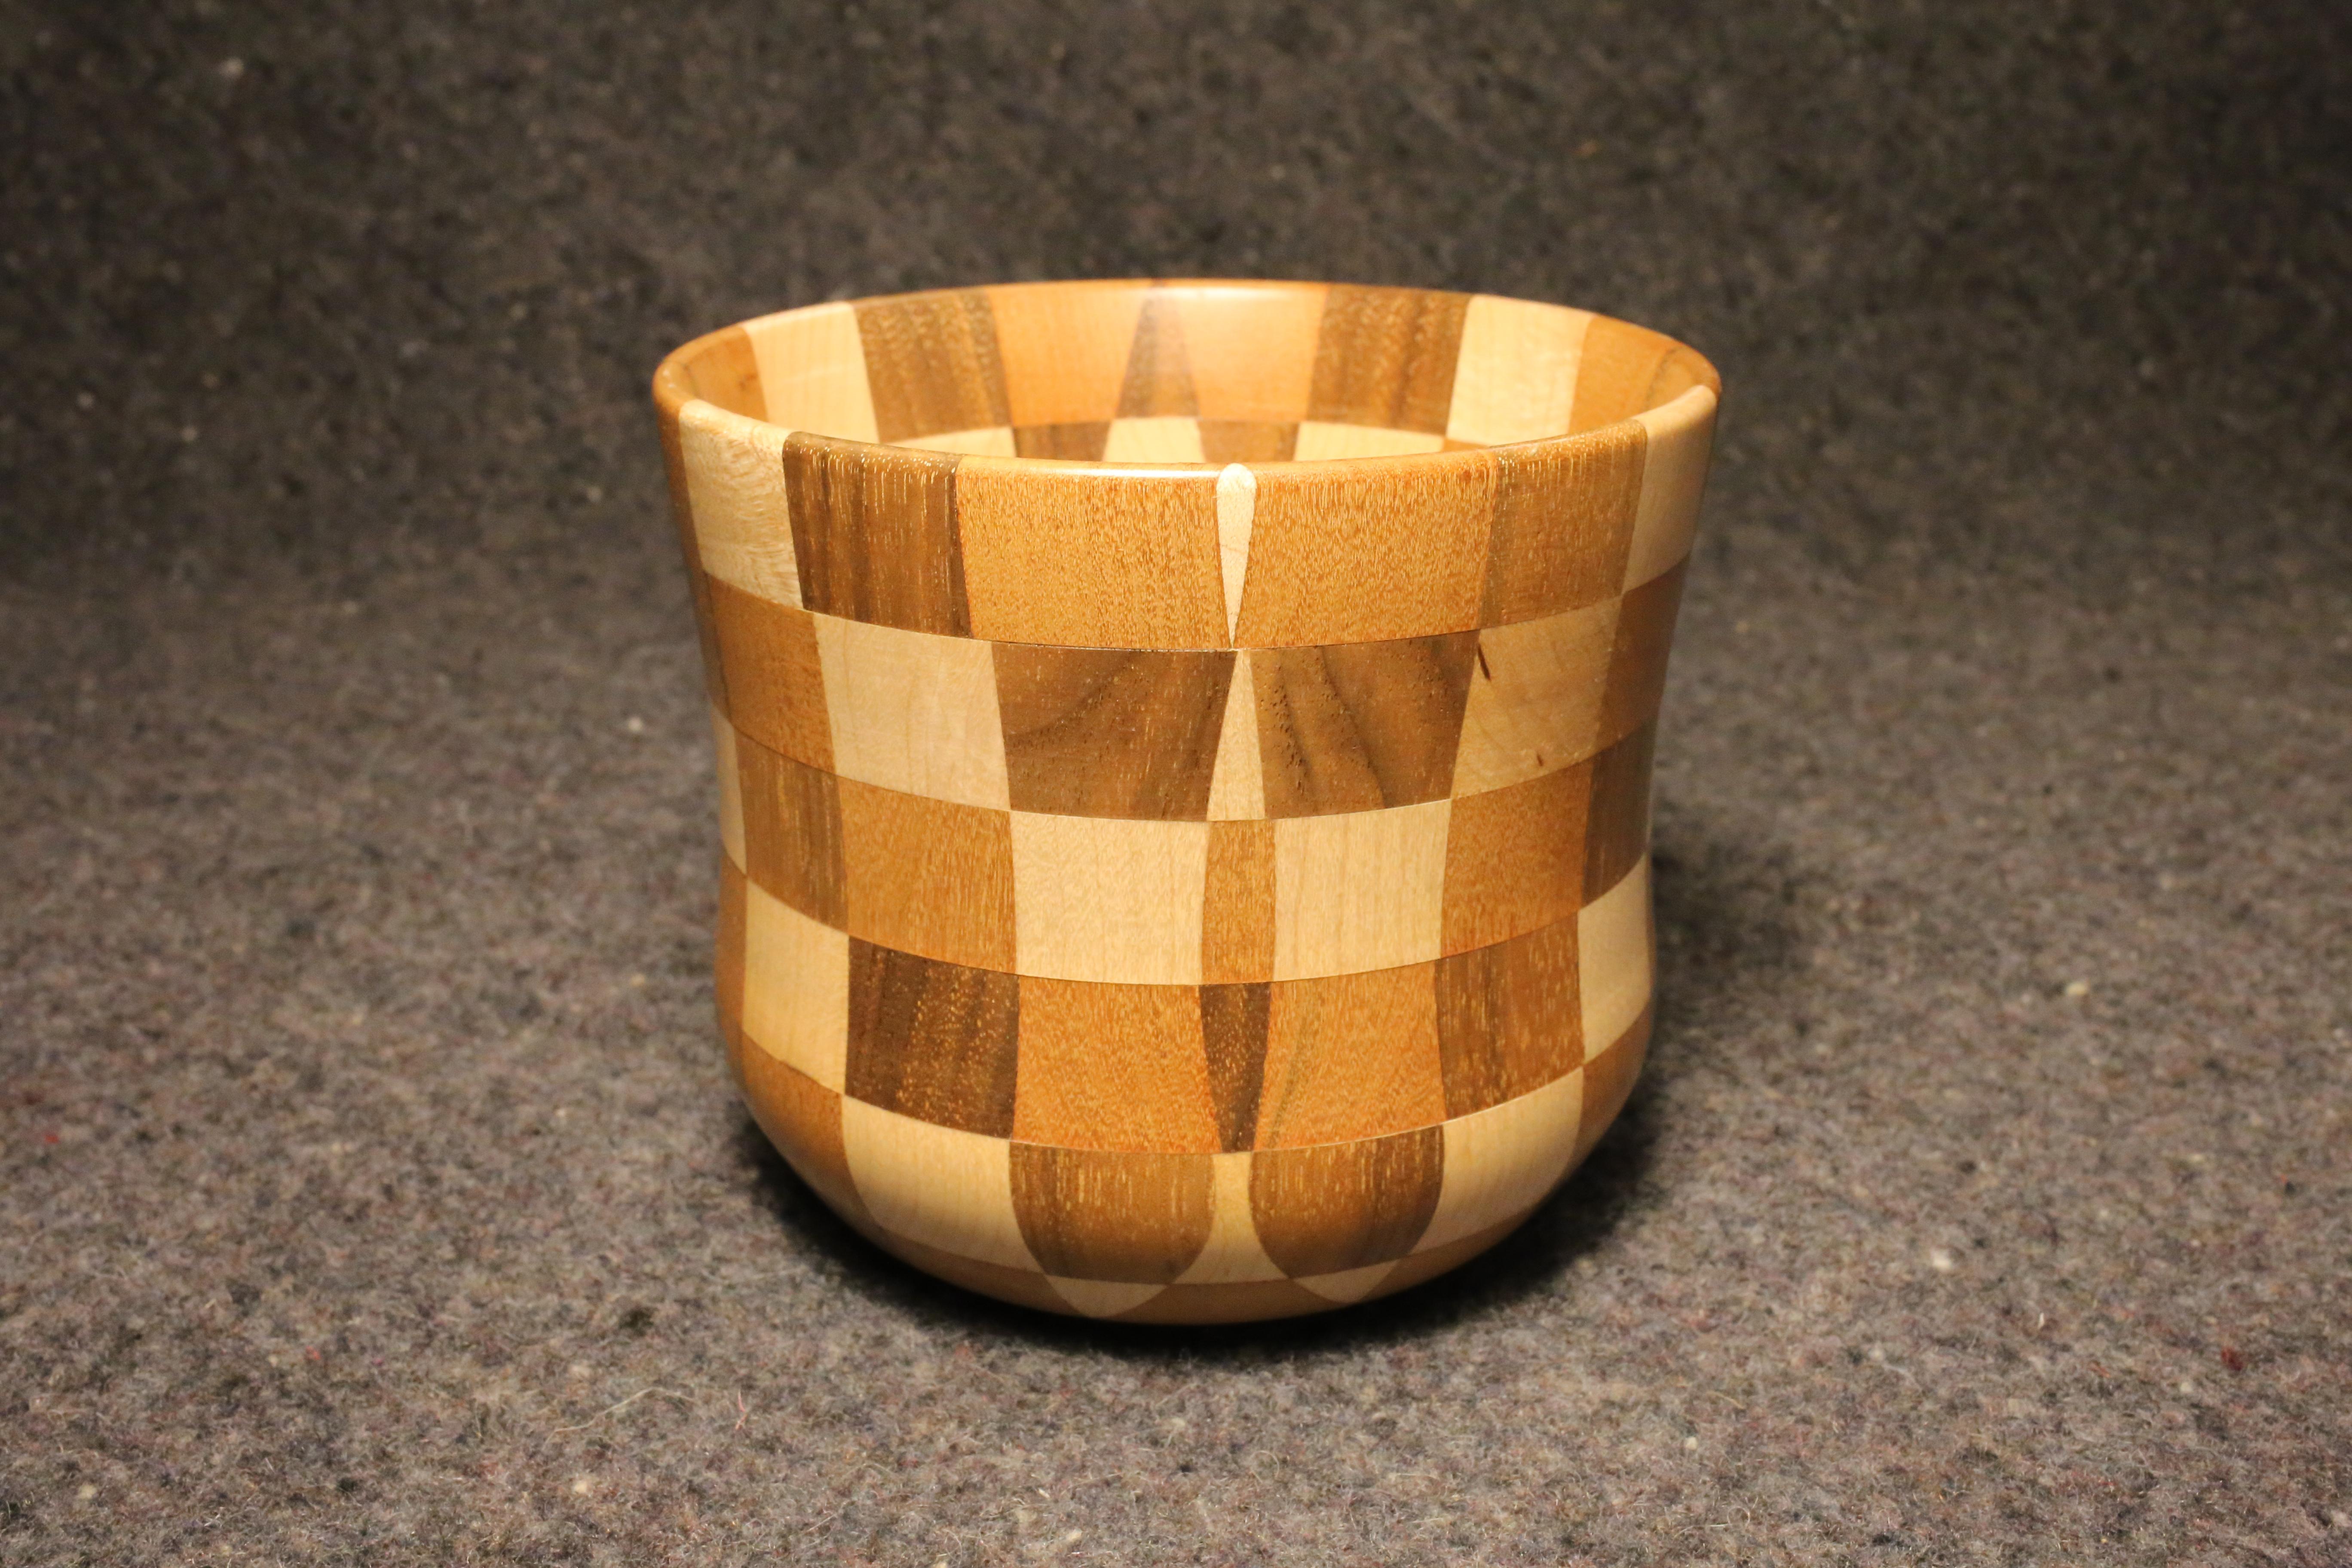 a wooden bowl